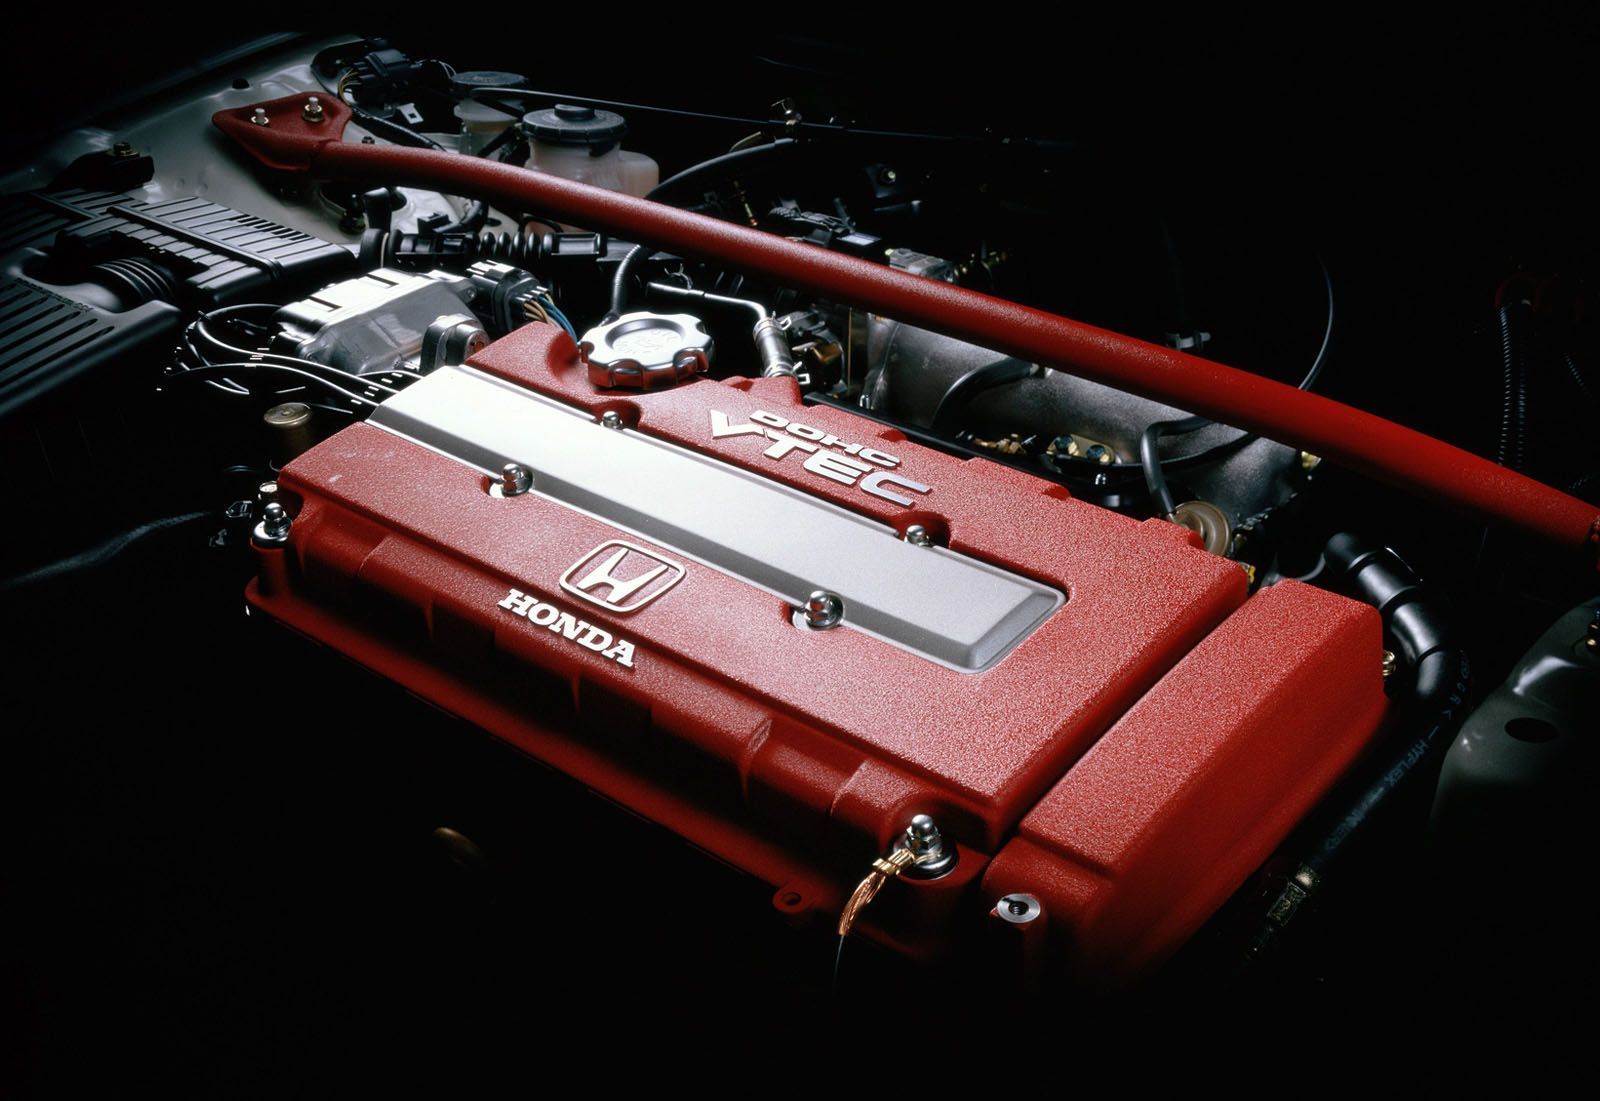 Honda VTEC Variable Valve Timing Performance Engine Explained Tech